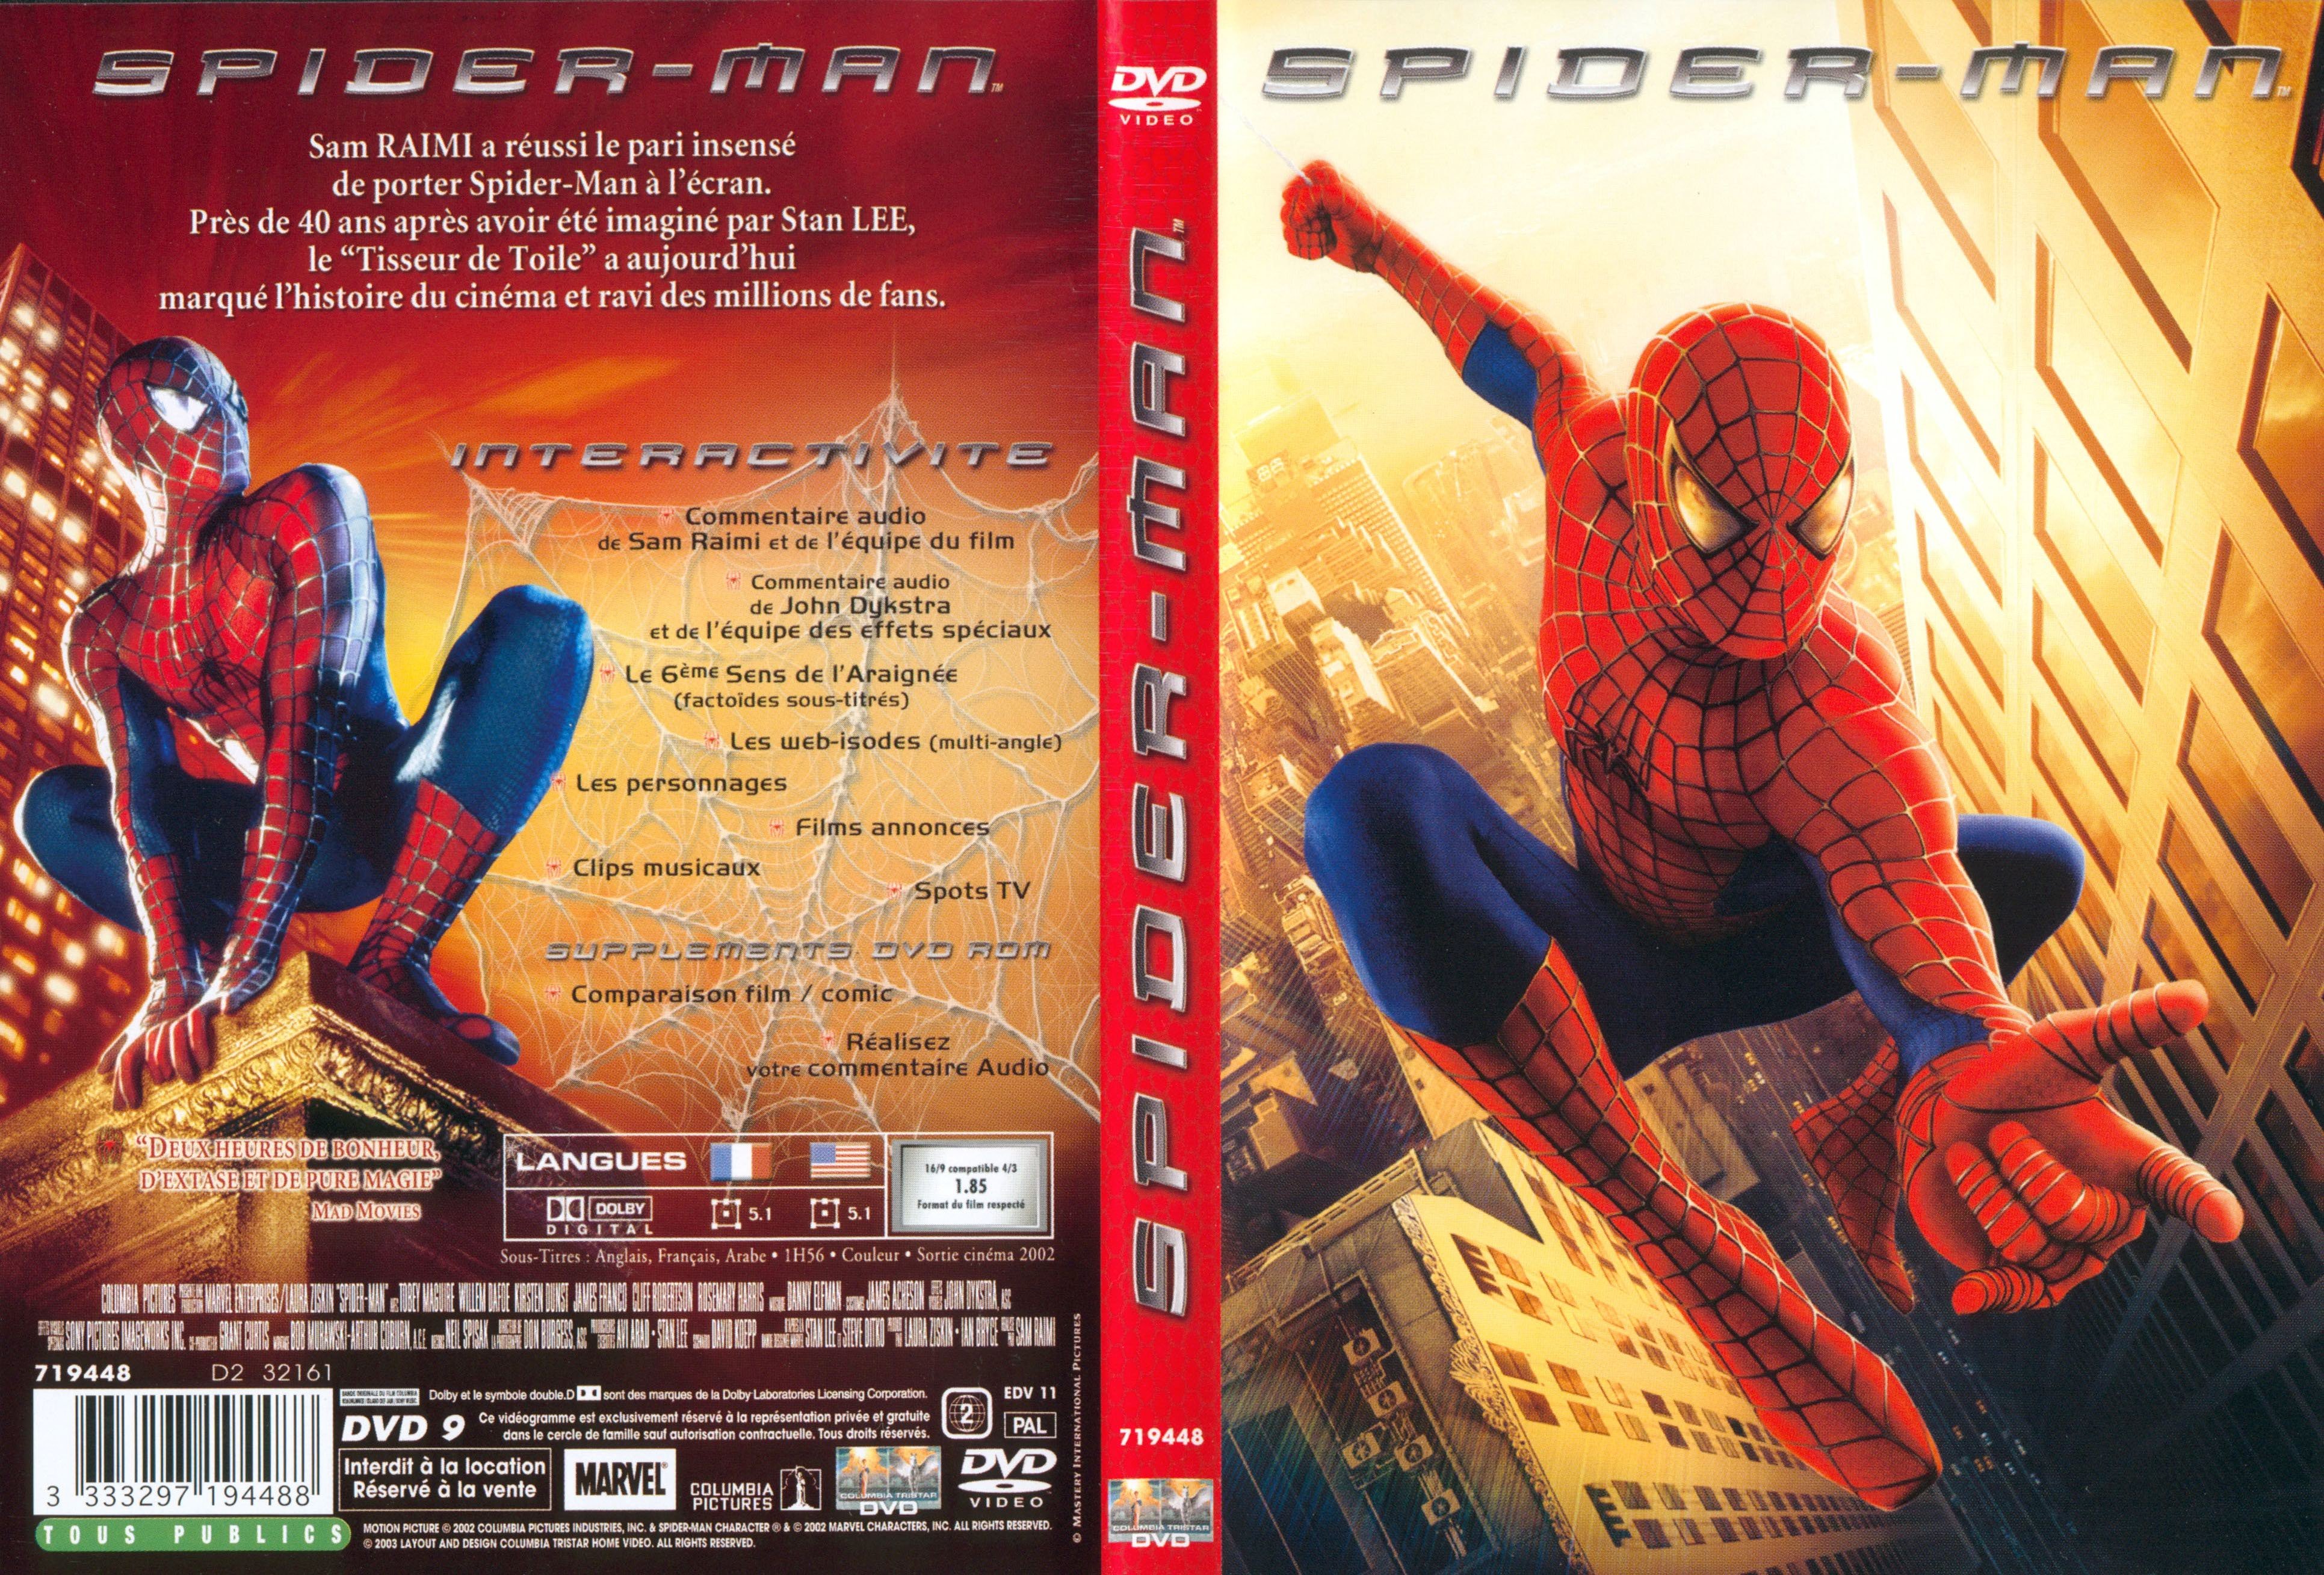 Jaquette DVD Spiderman